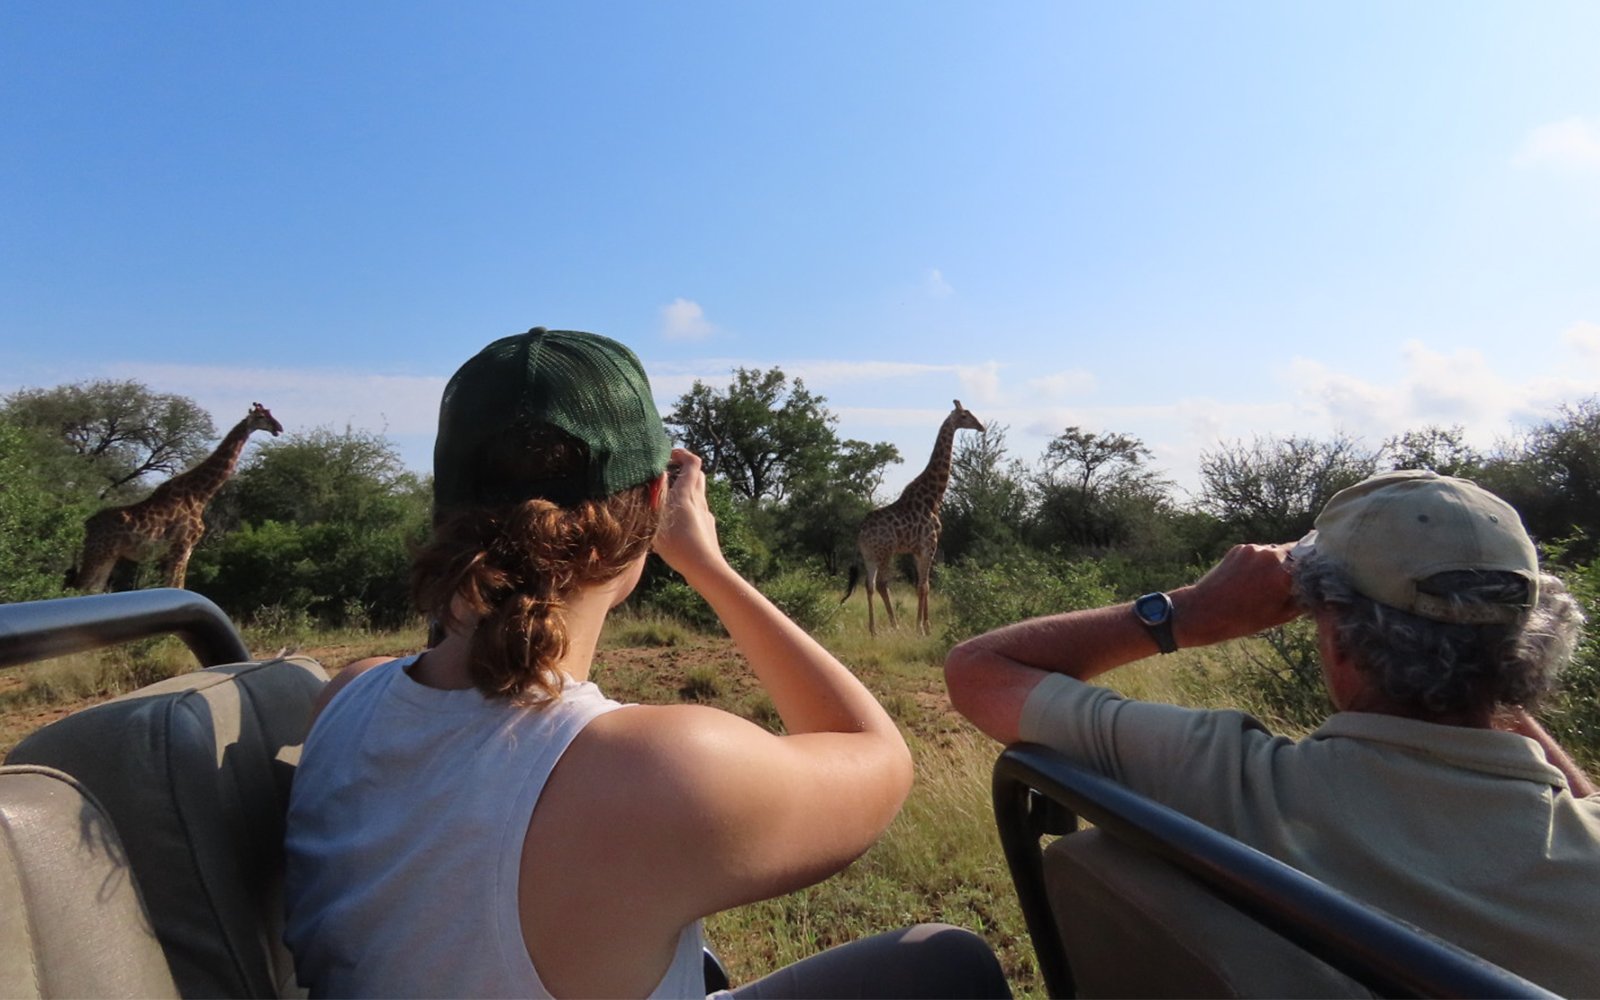 Student taking photo of giraffes